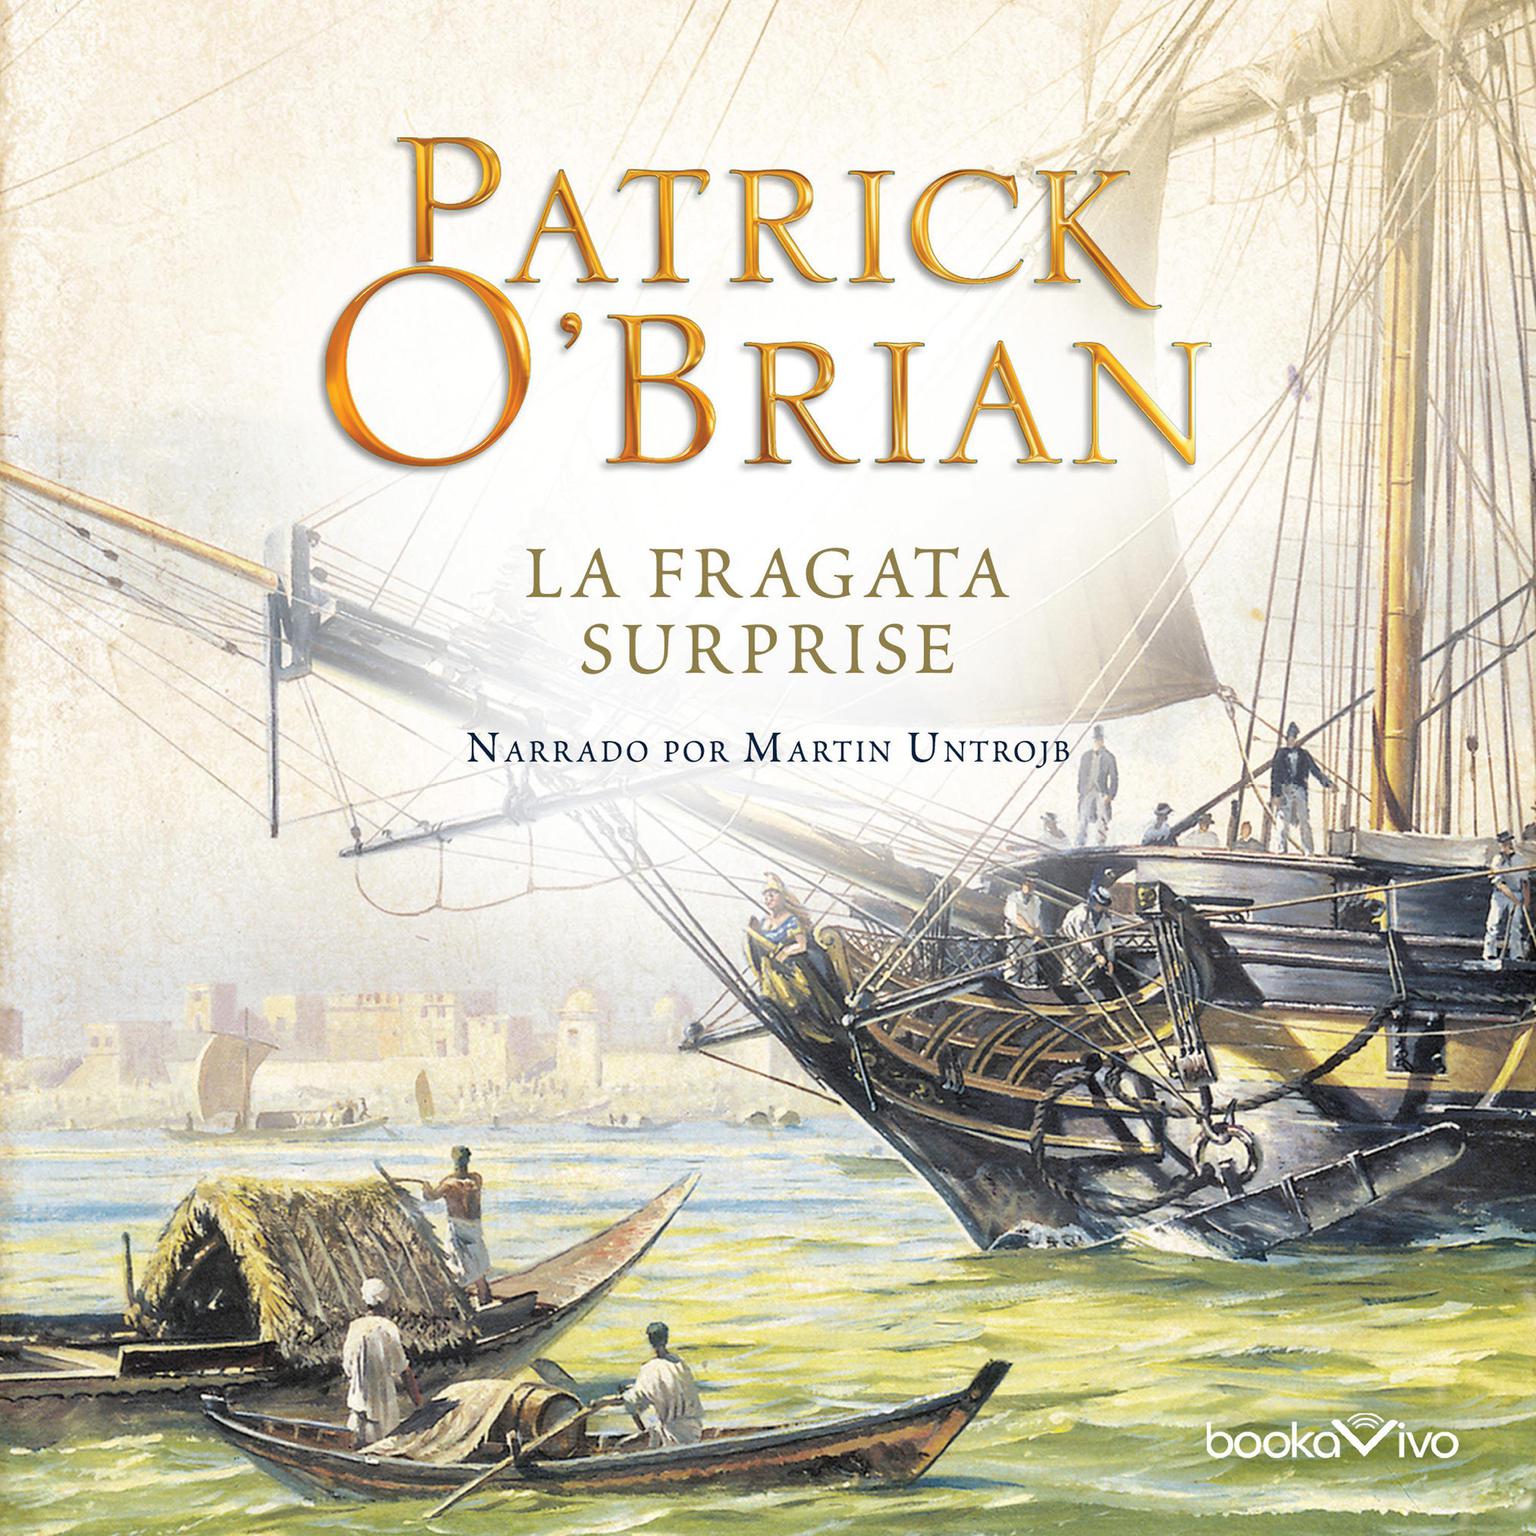 La Fragata Surprise Audiobook, by Patrick O'Brian